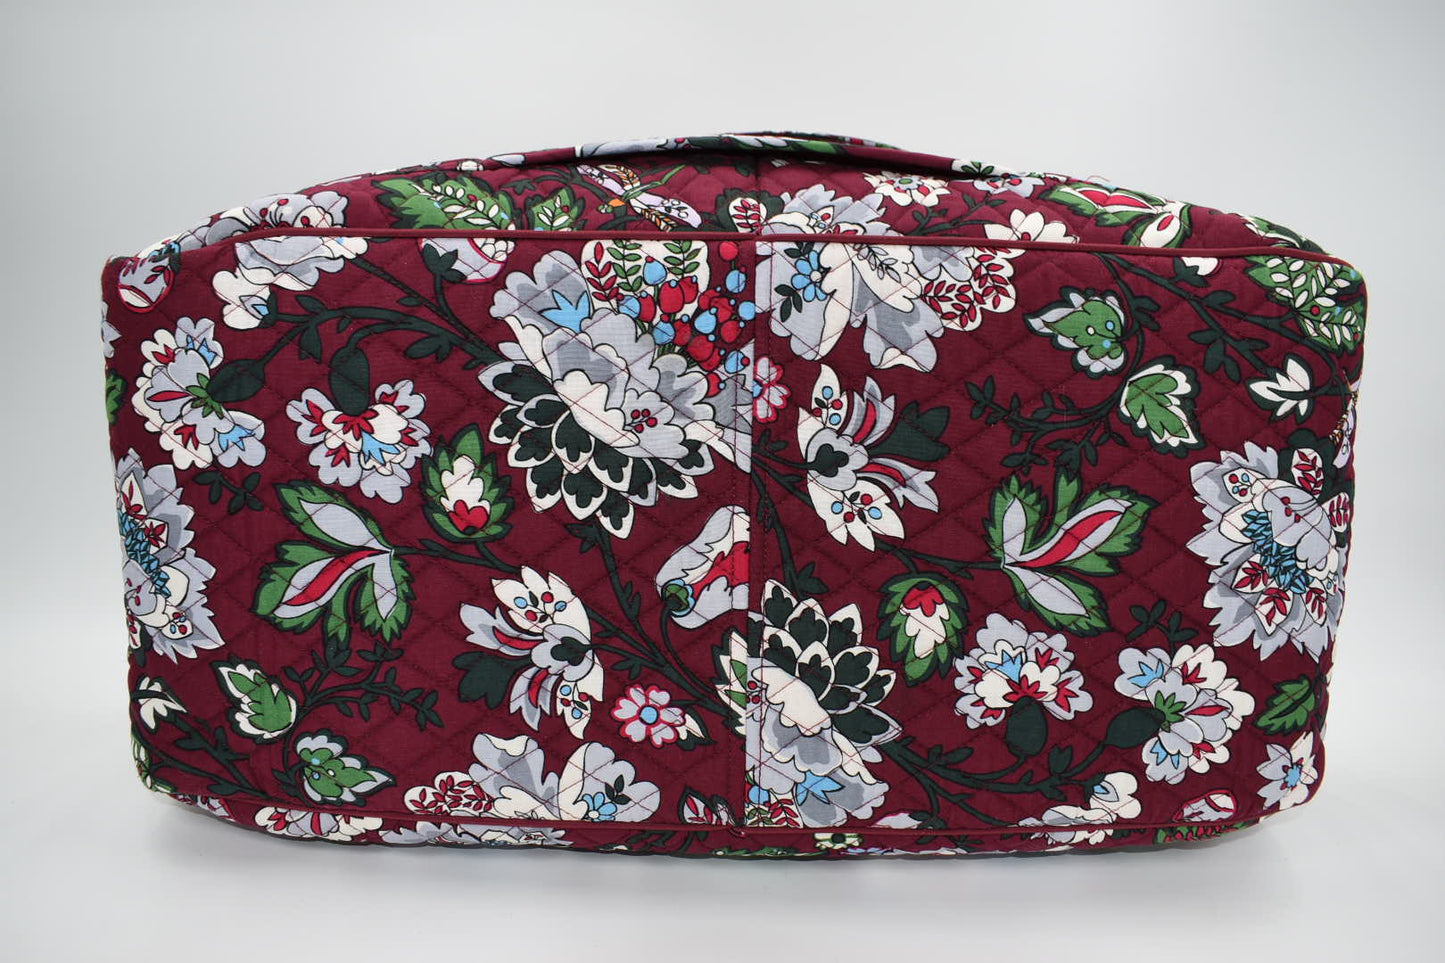 Vera Bradley Grand Traveler Bag in "Bordeaux Blooms" Pattern